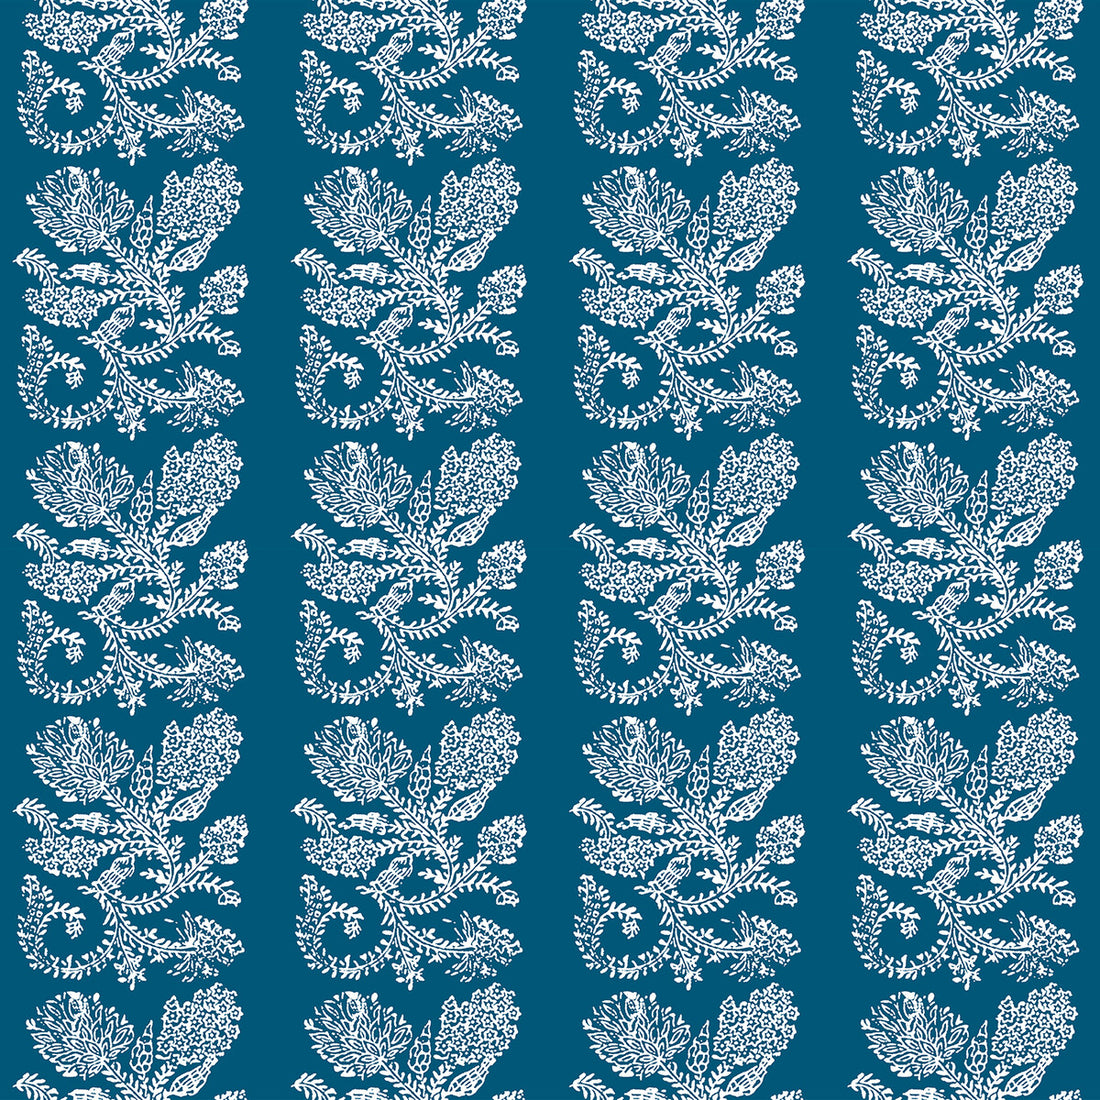 Camino fabric in azul color - pattern LCT1026.002.0 - by Gaston y Daniela in the Lorenzo Castillo V collection